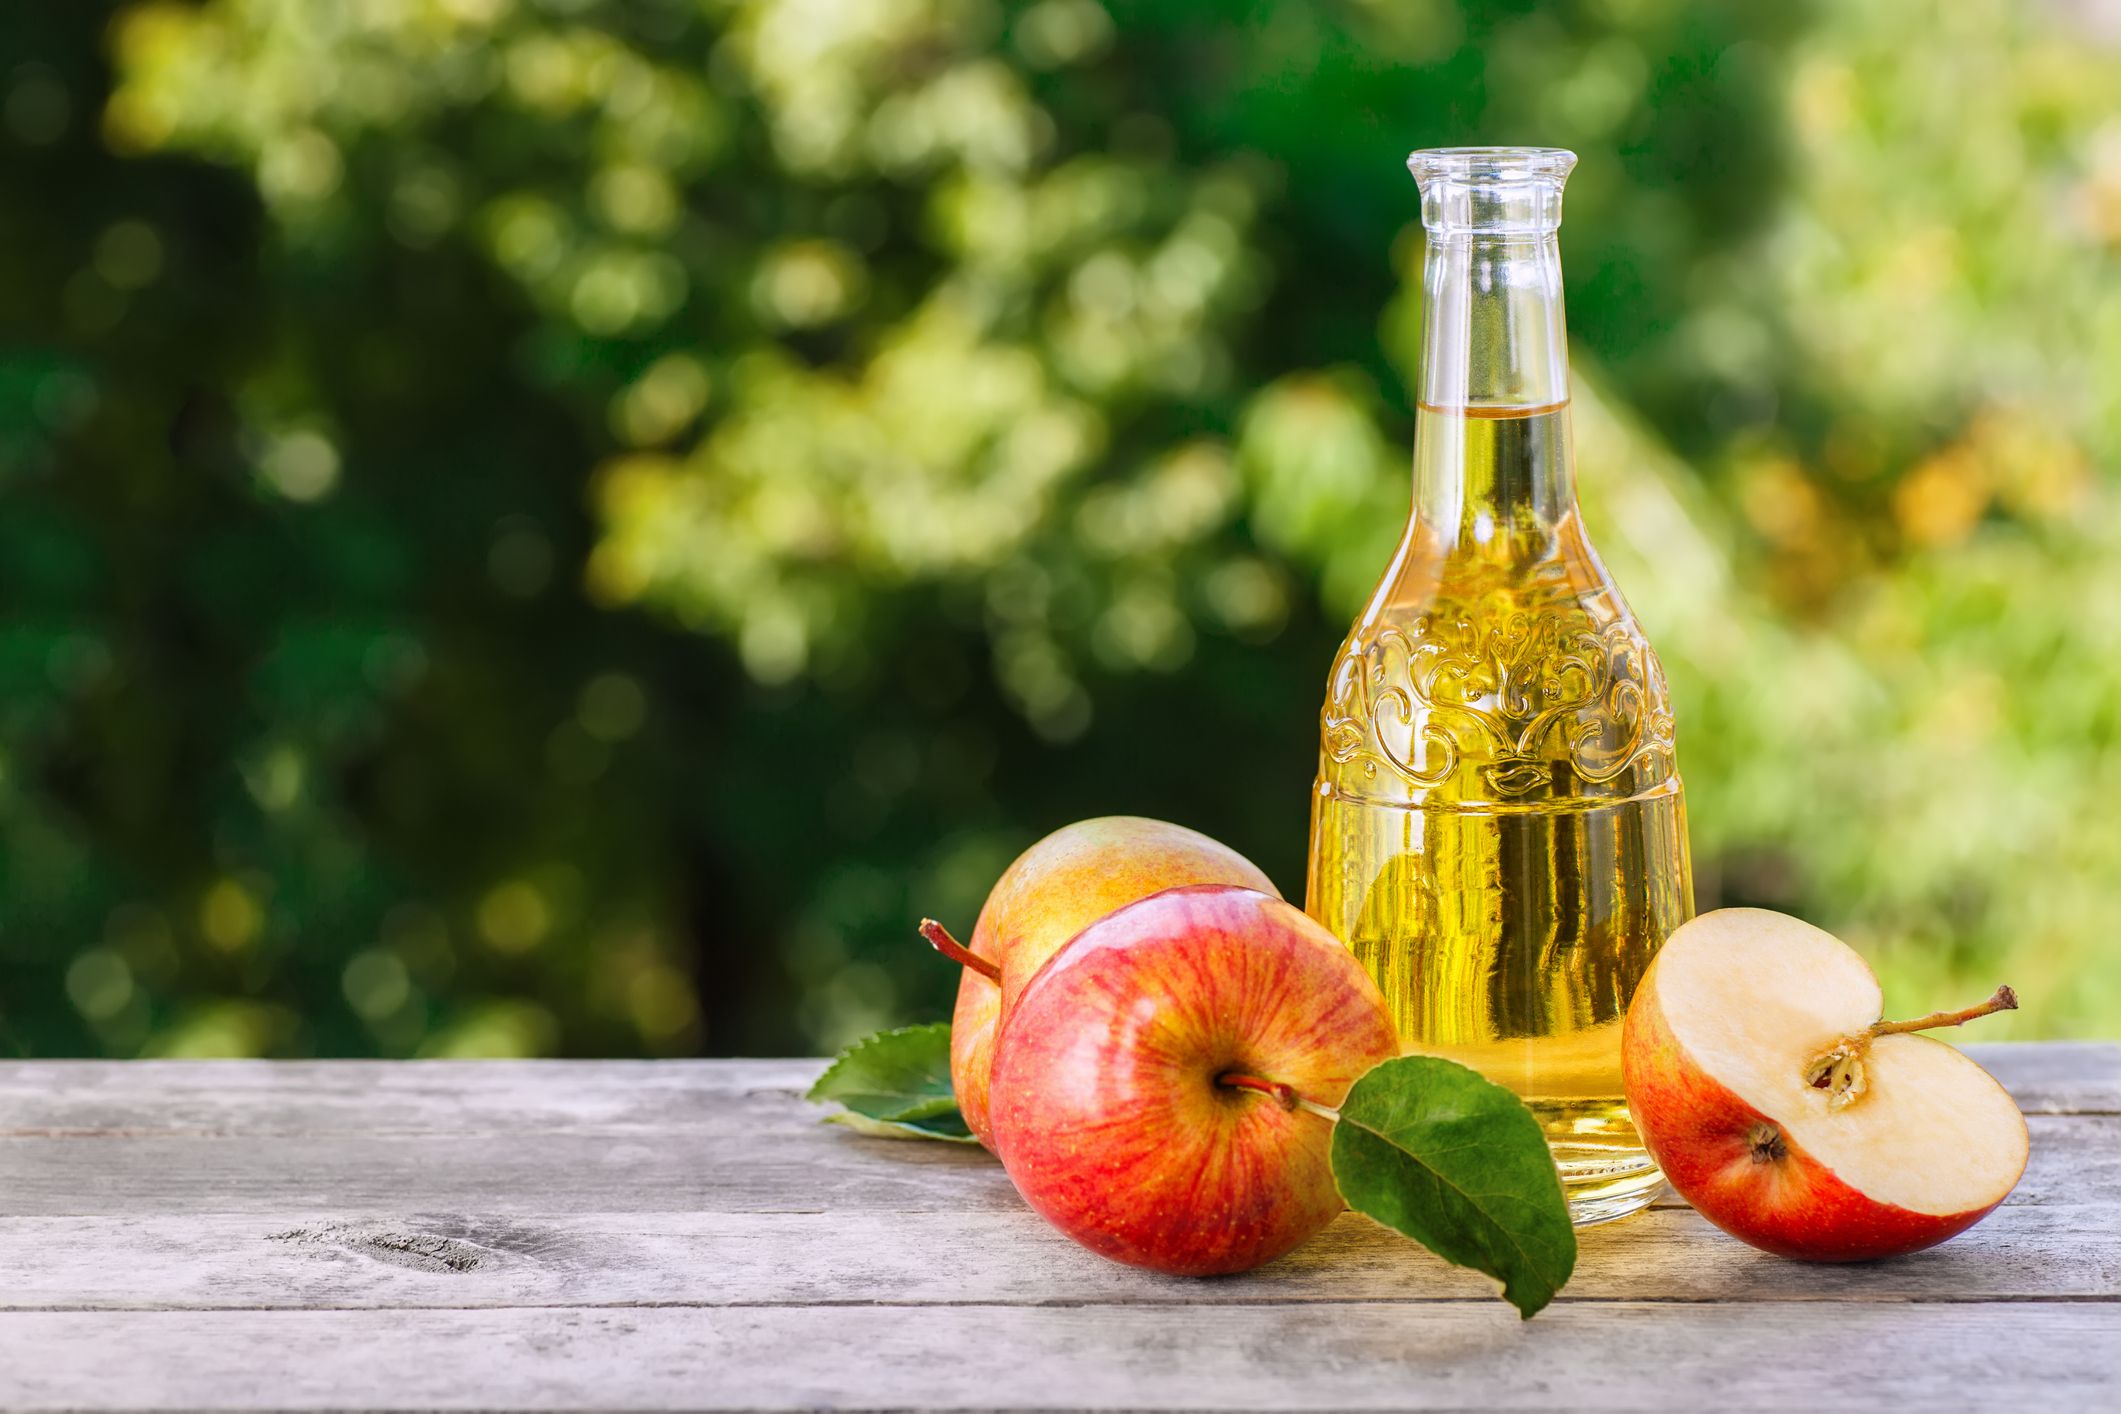 Apple Cider Vinegar Benefits: Is It Worth the Hype?